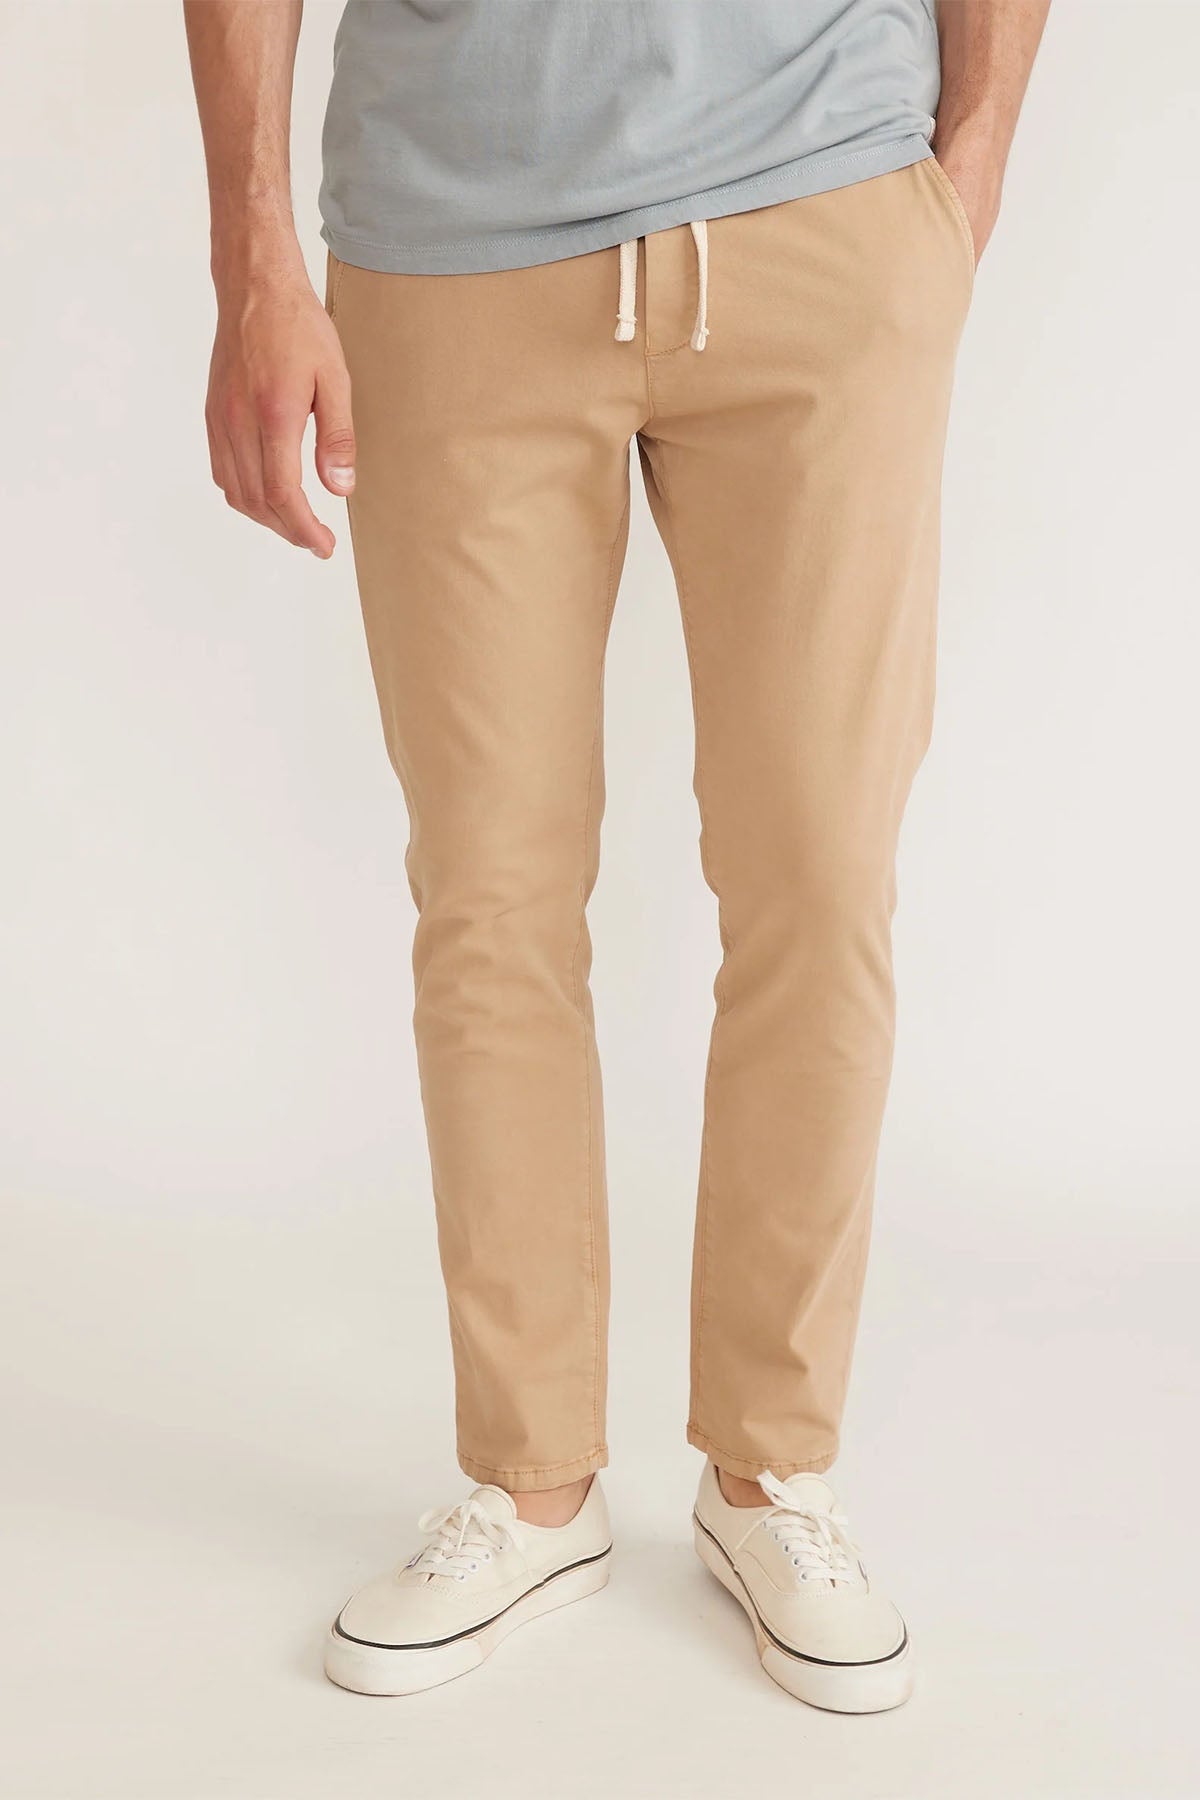 Marine Layer - Saturday Slim Fit Pant - Faded Khaki - Front